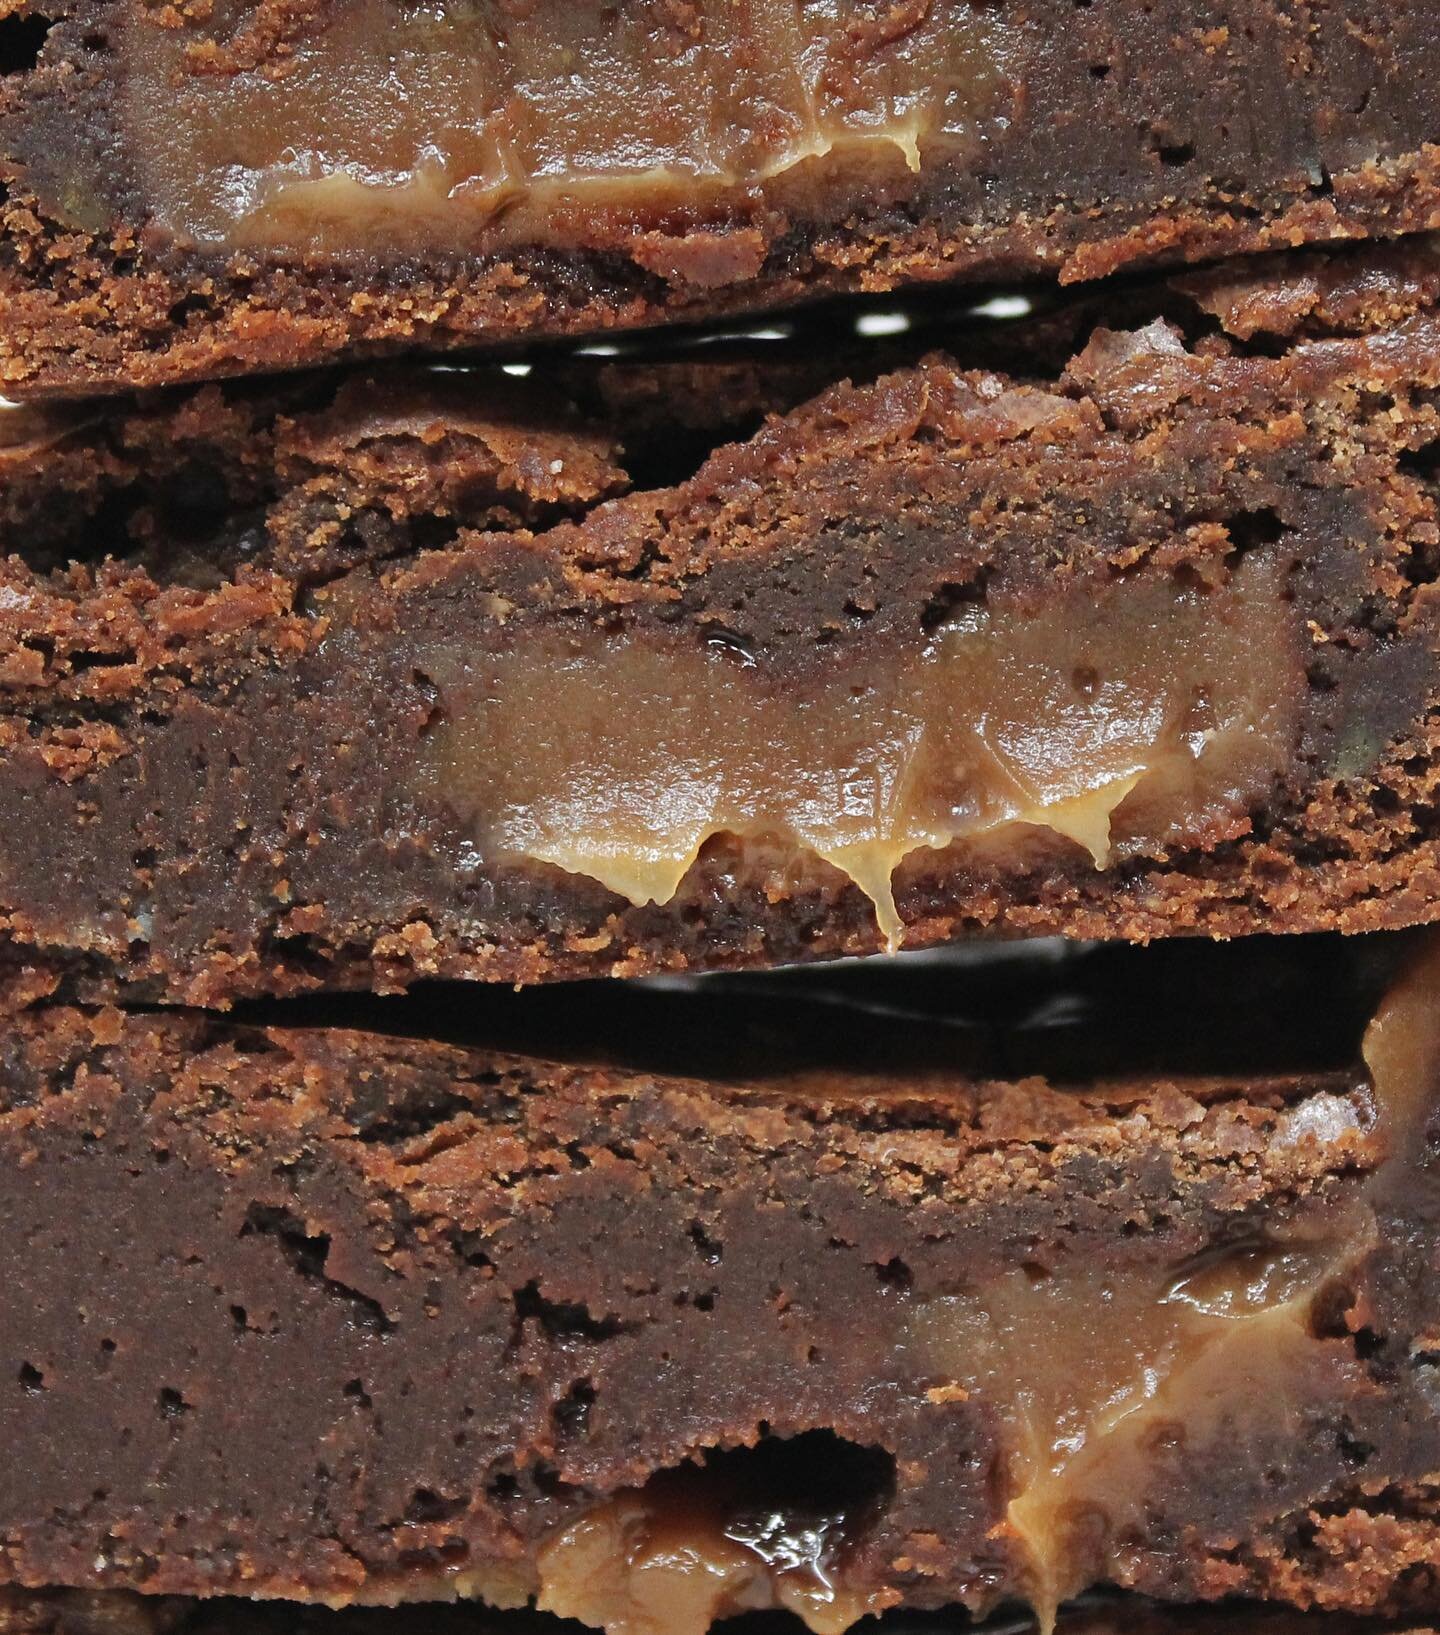 Oooozy

#brownie #caramel #smallbusiness #londoneats #londonfood #bakery